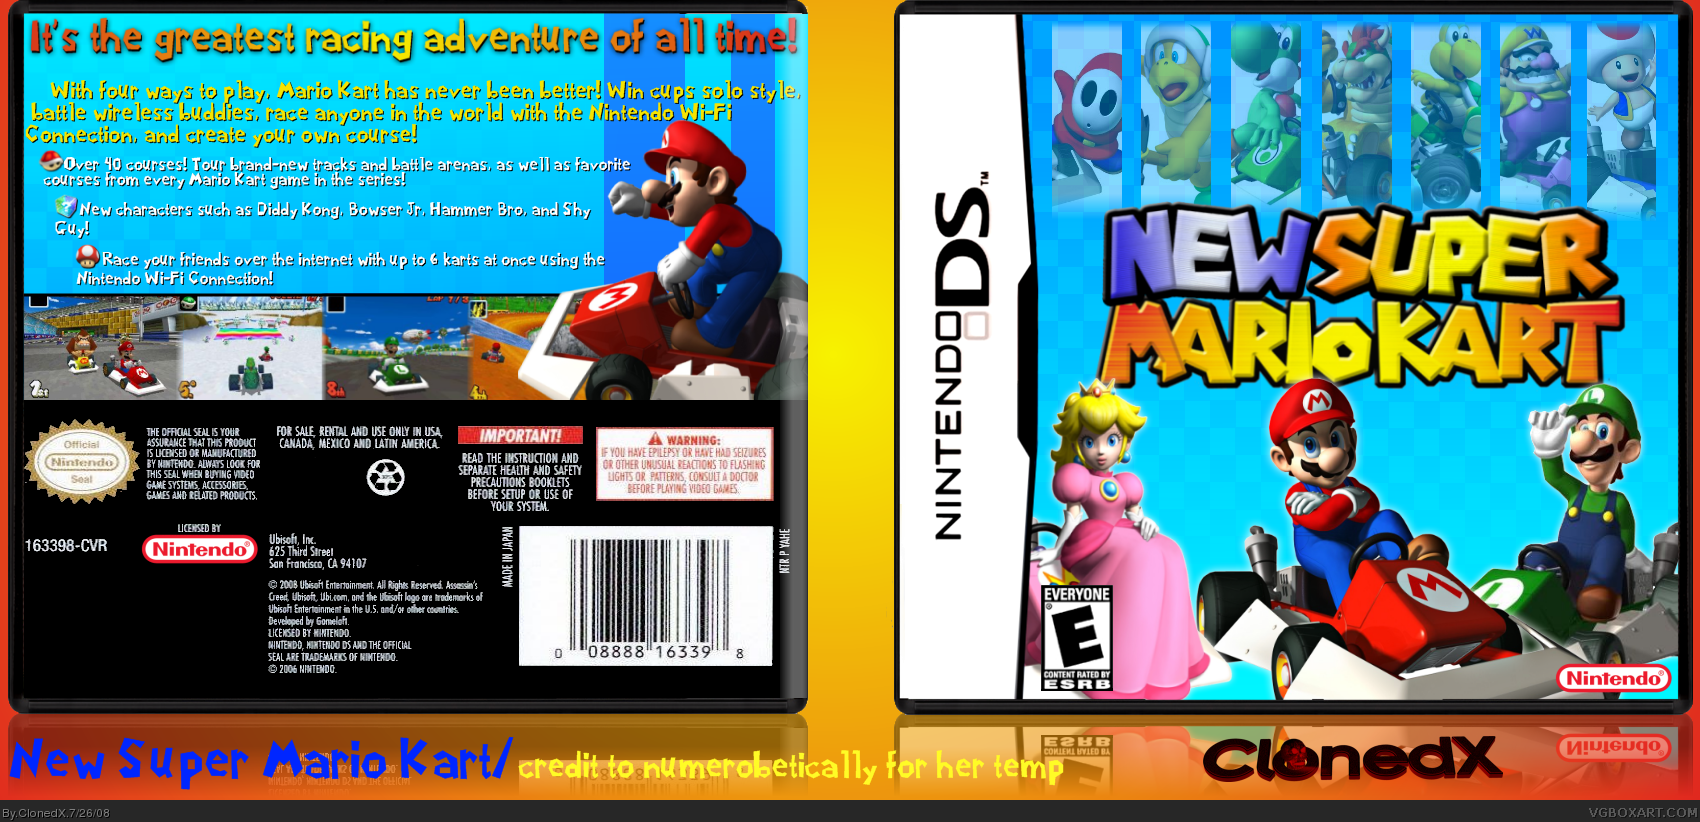 New Super Mario Kart box cover